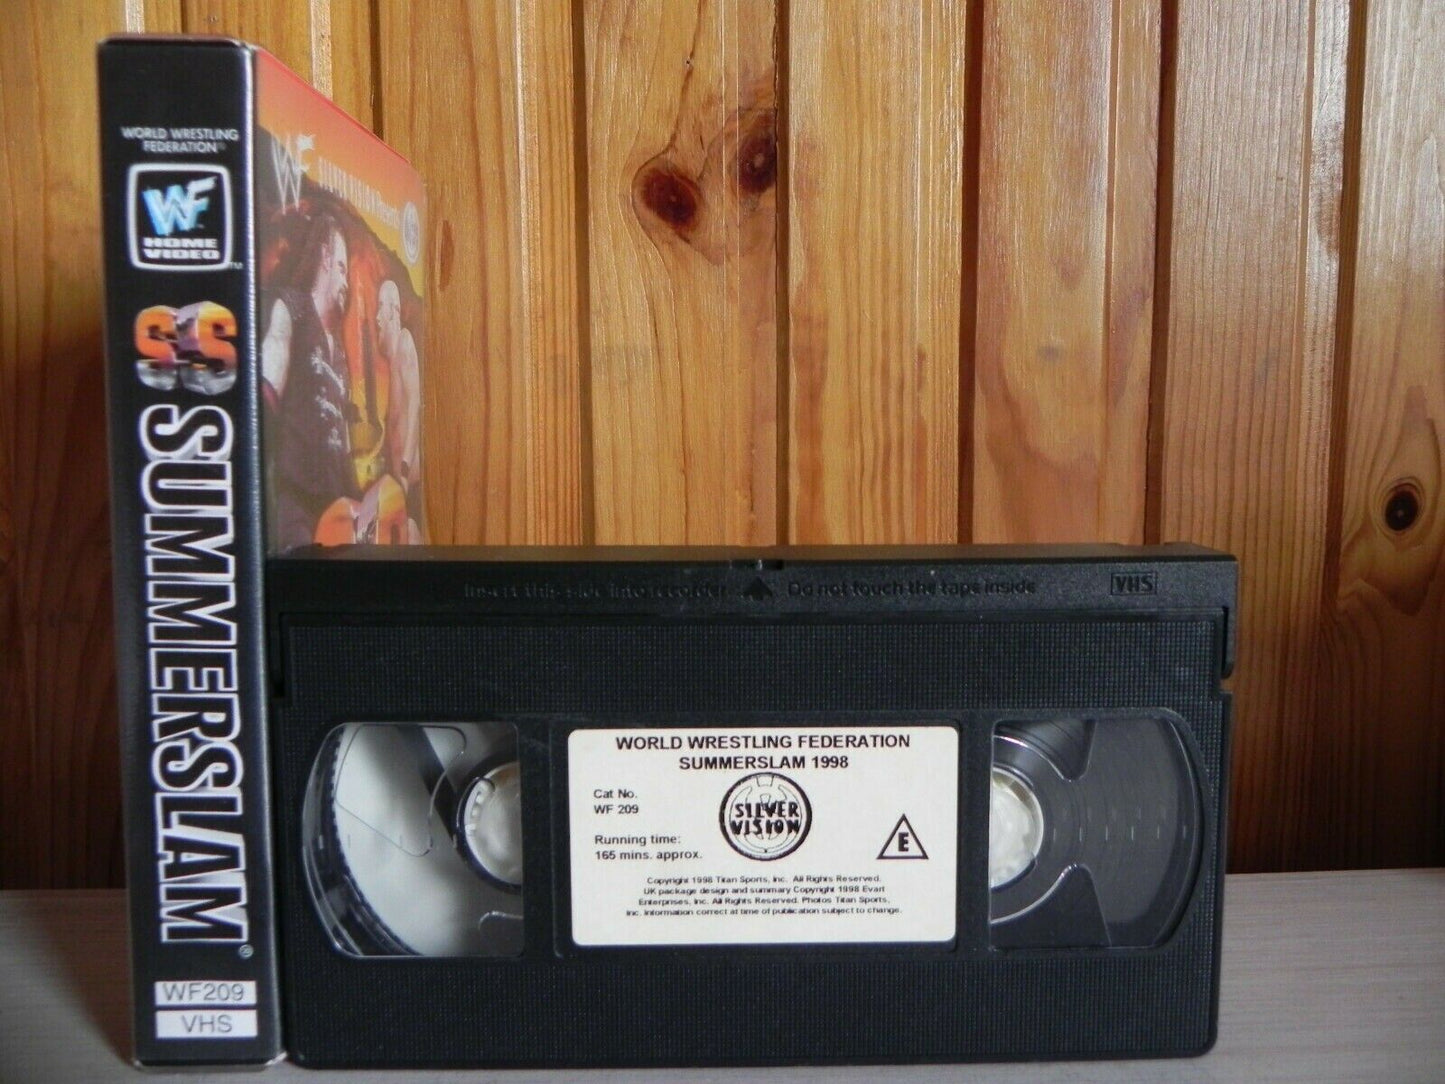 WWF - Summerslam - Highway To Hell - The Rock - Triple H - Owen Hart - VHS-